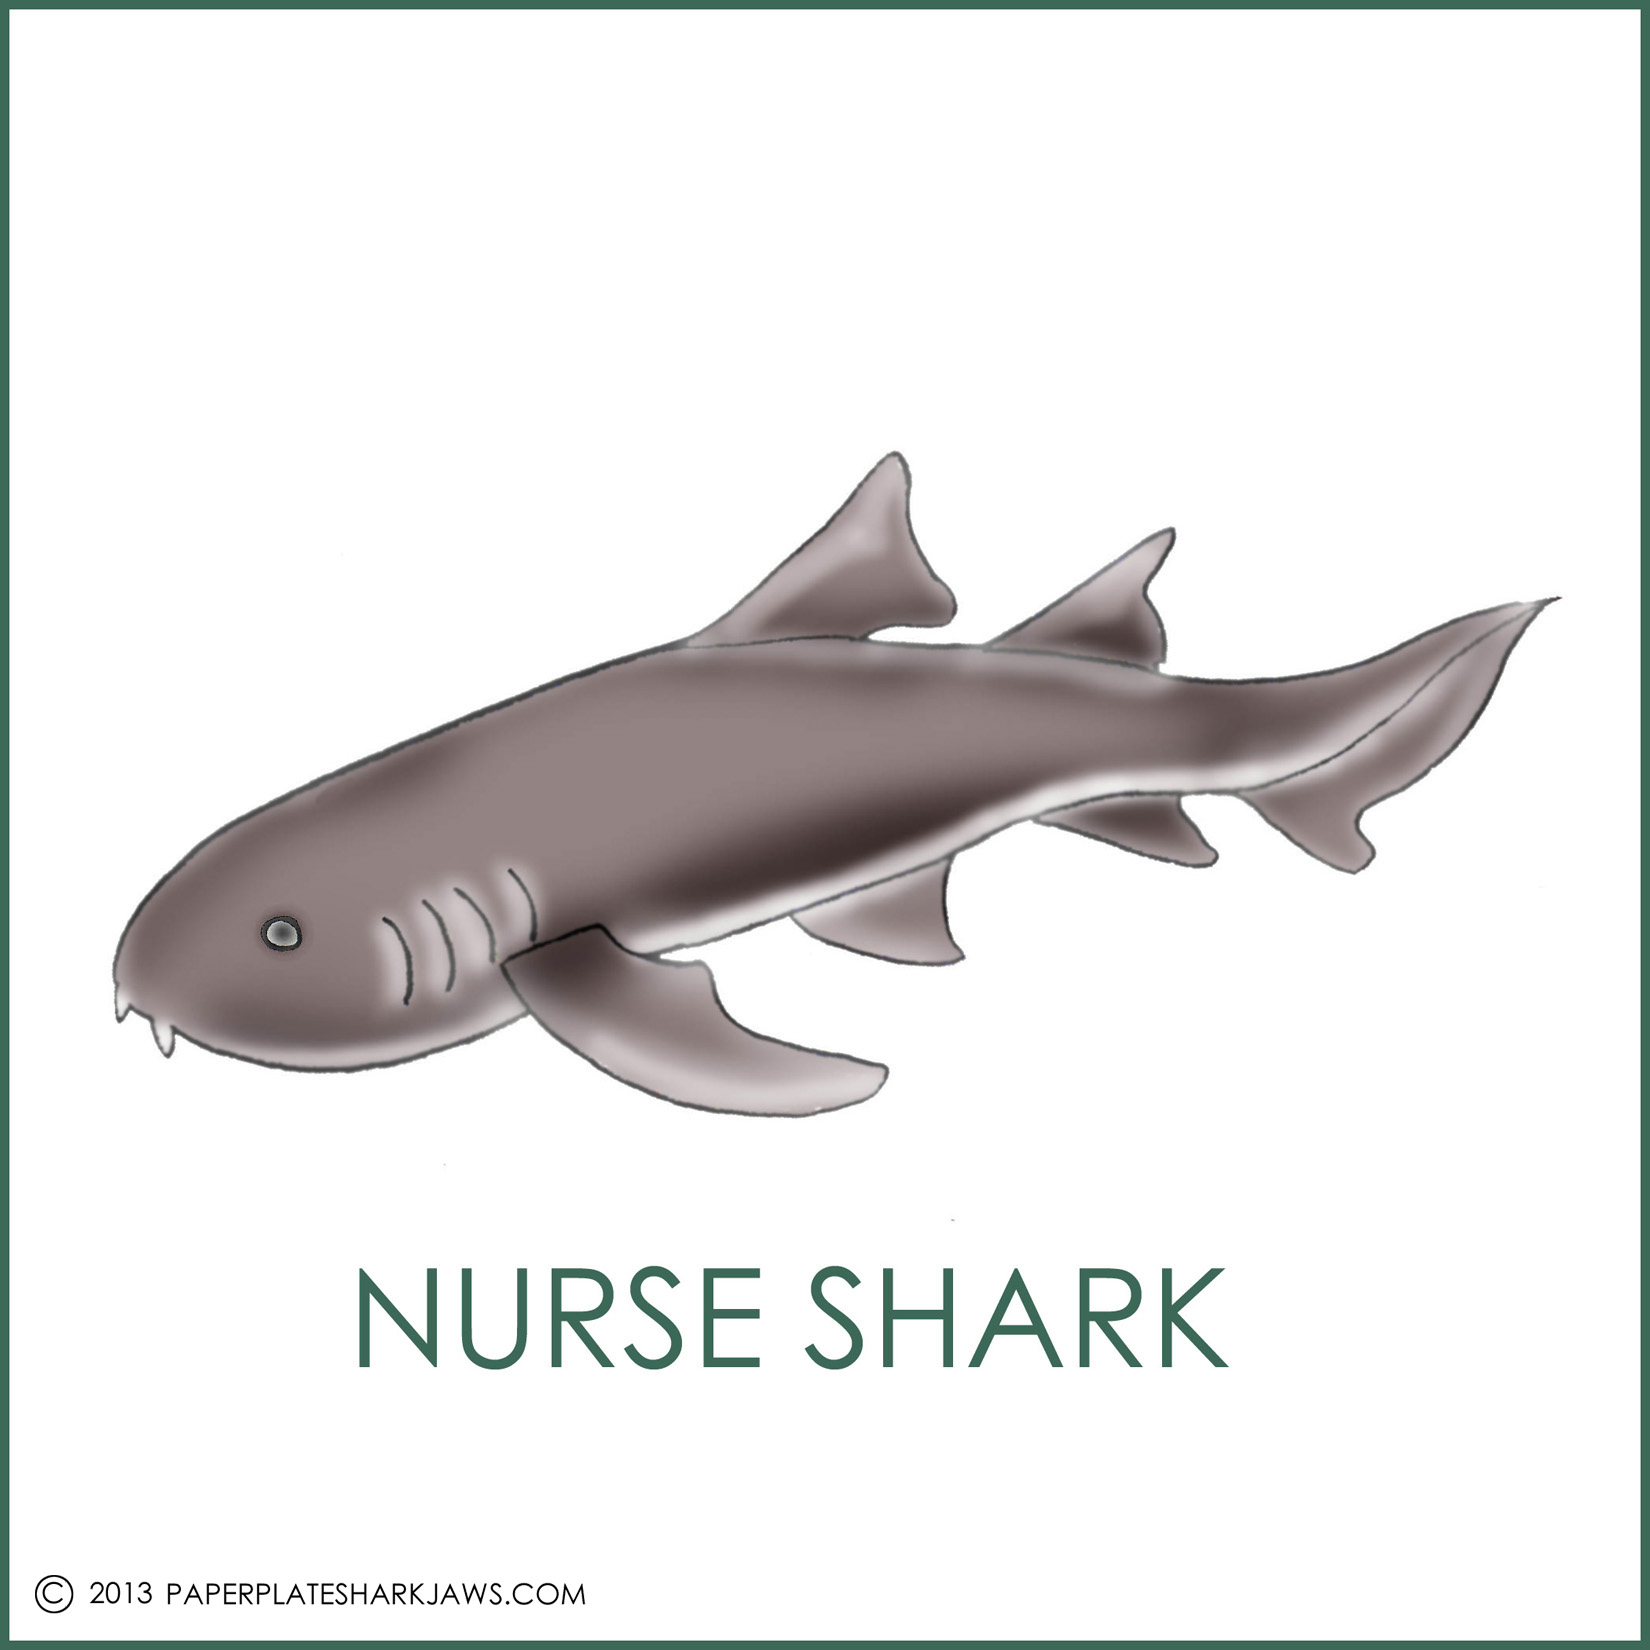 Nurse Shark Games